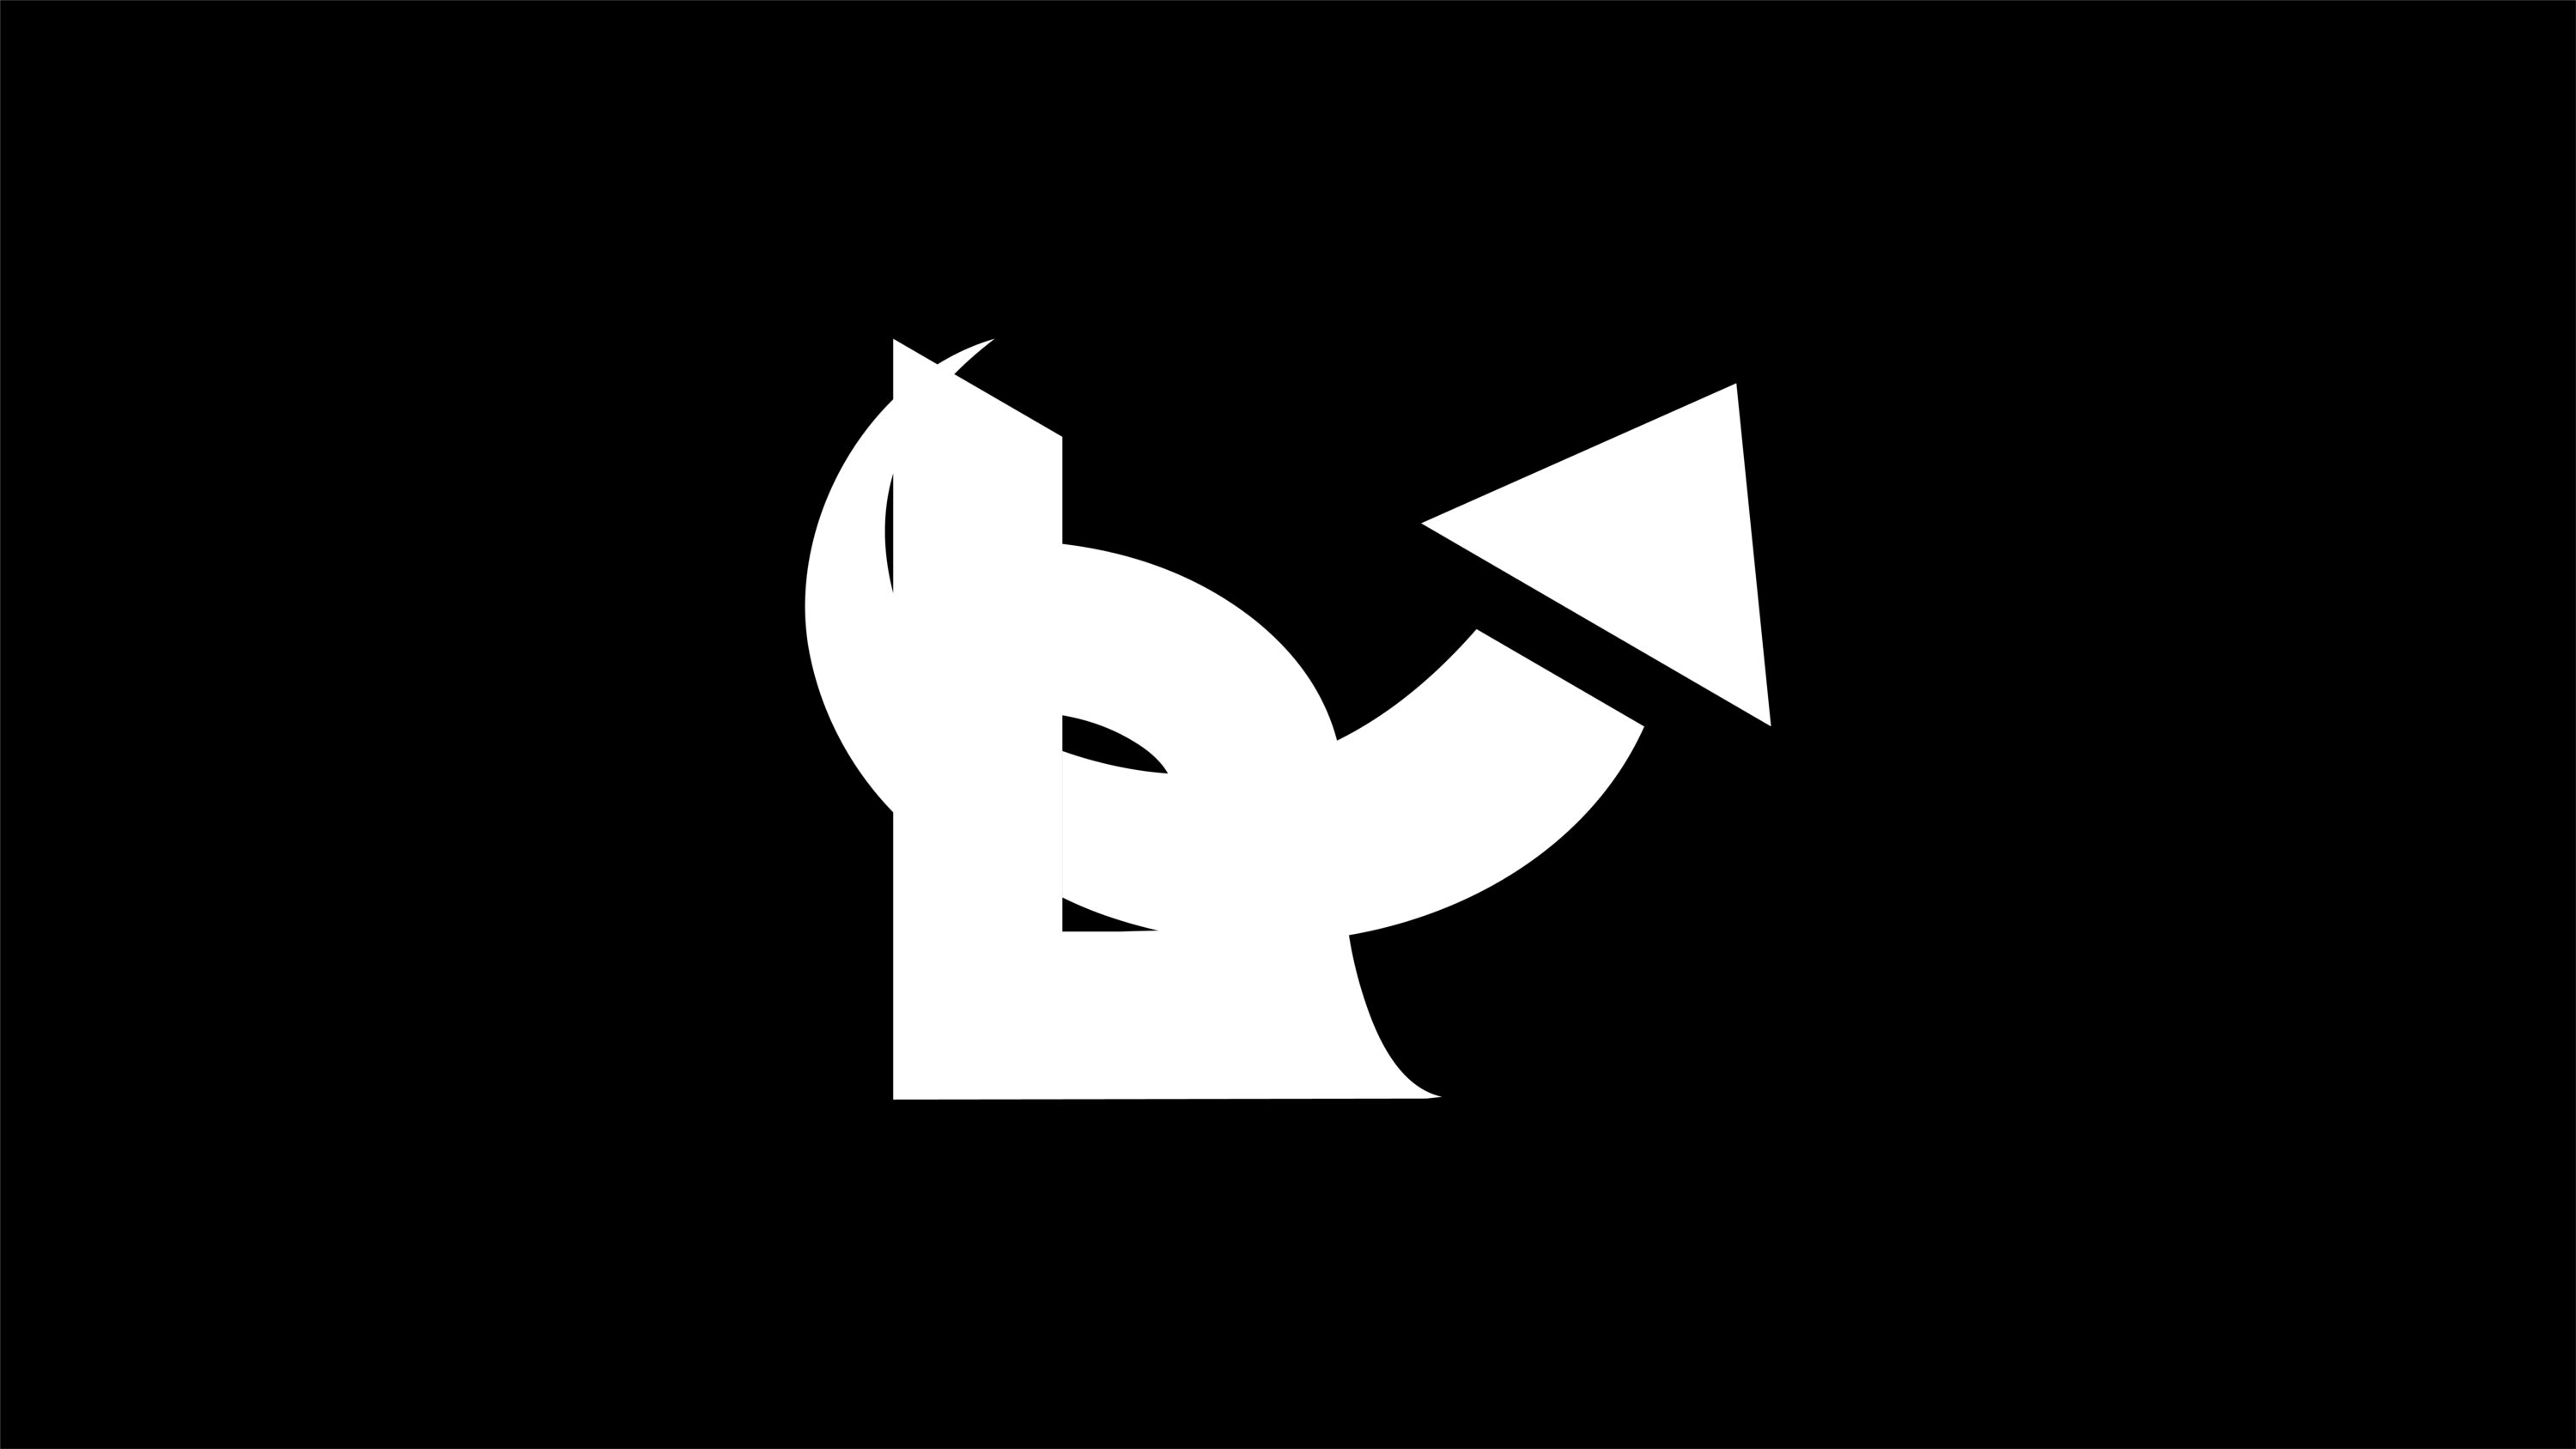 B Letter Logo - B Stock Professional Logo Design Only 10$, white letter with white arrow logo.